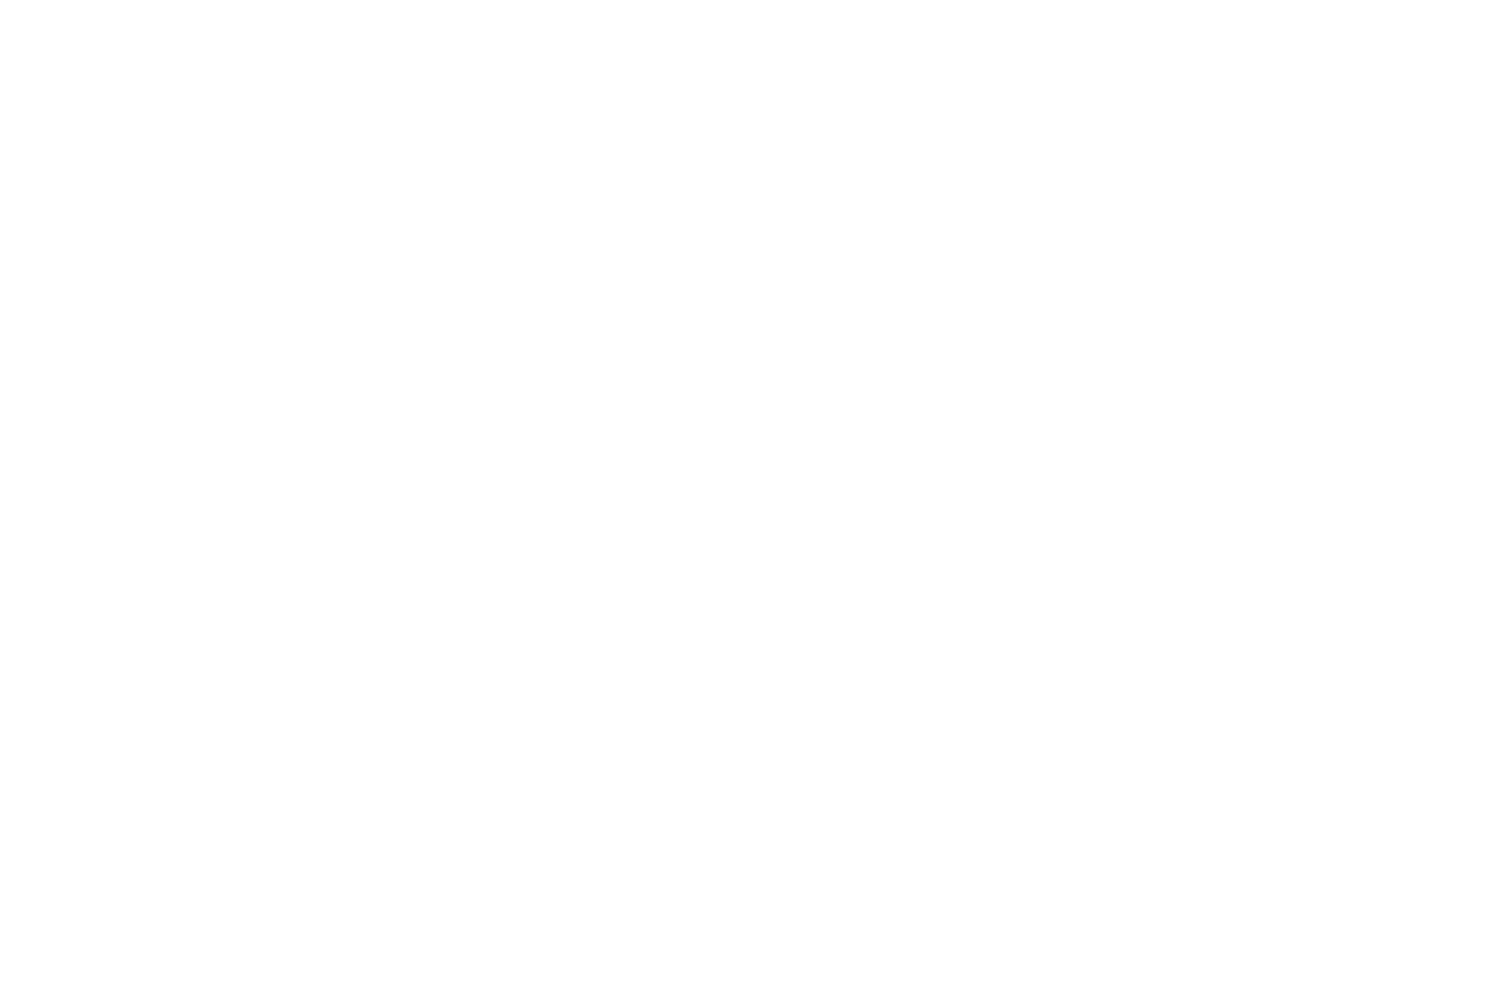 Tara Thatcher Photography